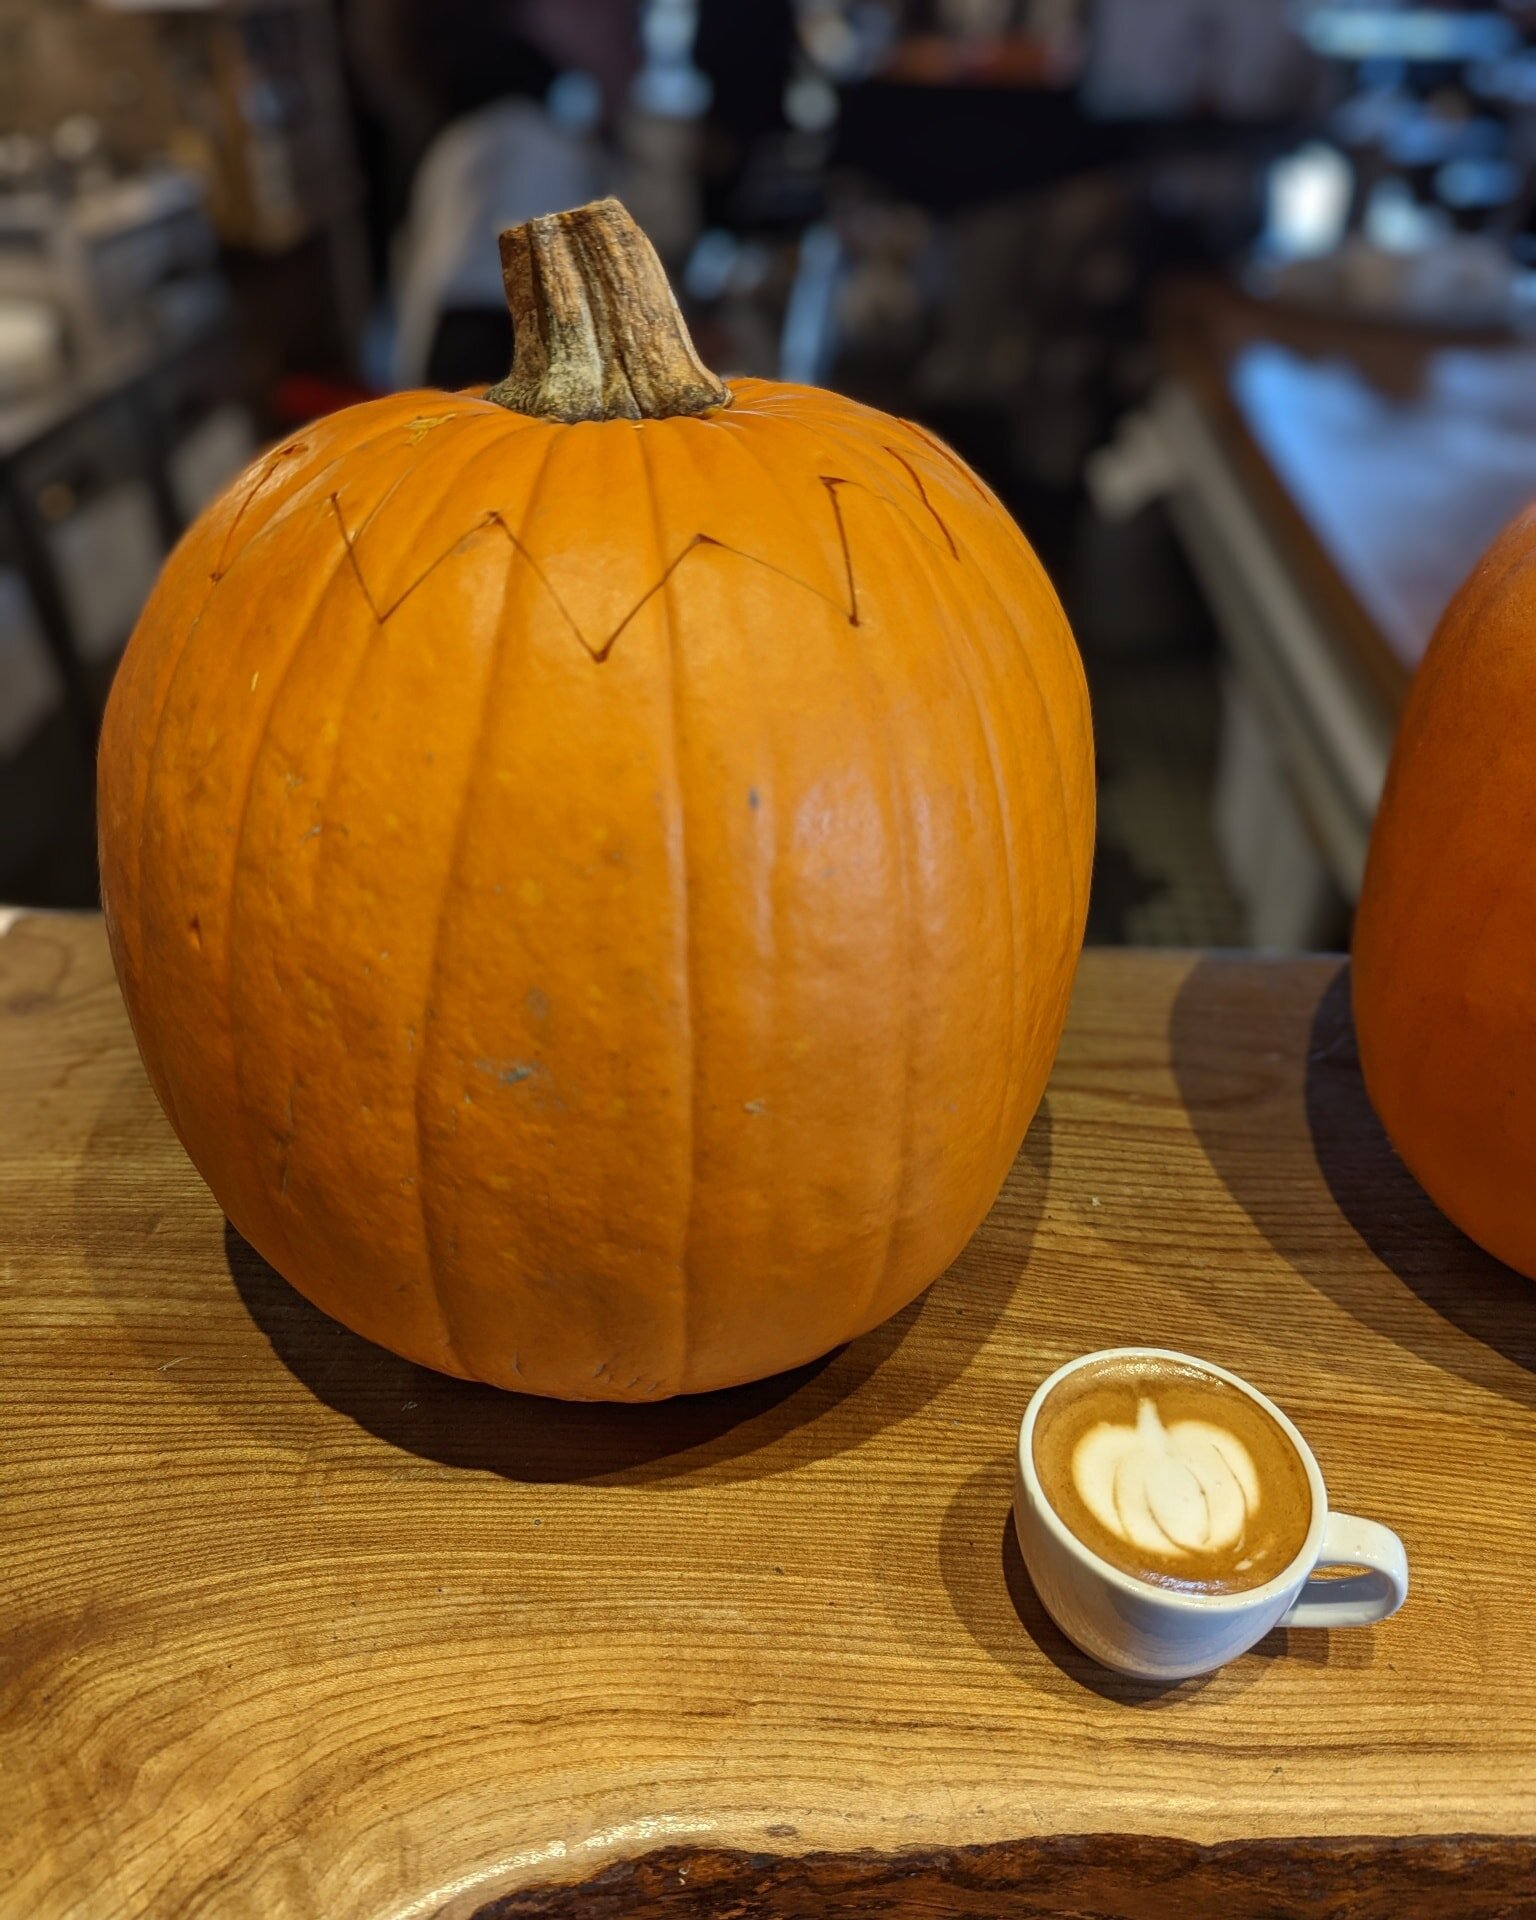 Love Halloween but hate pumpkin spice lattes?
.
Jay's got you covered with some autumnal latte art 😛
.
.
.
.
.
.
.
.
#edinburgh #coffeeshop #latteart #coffee #halloween #pumpkin #pumpkinspice